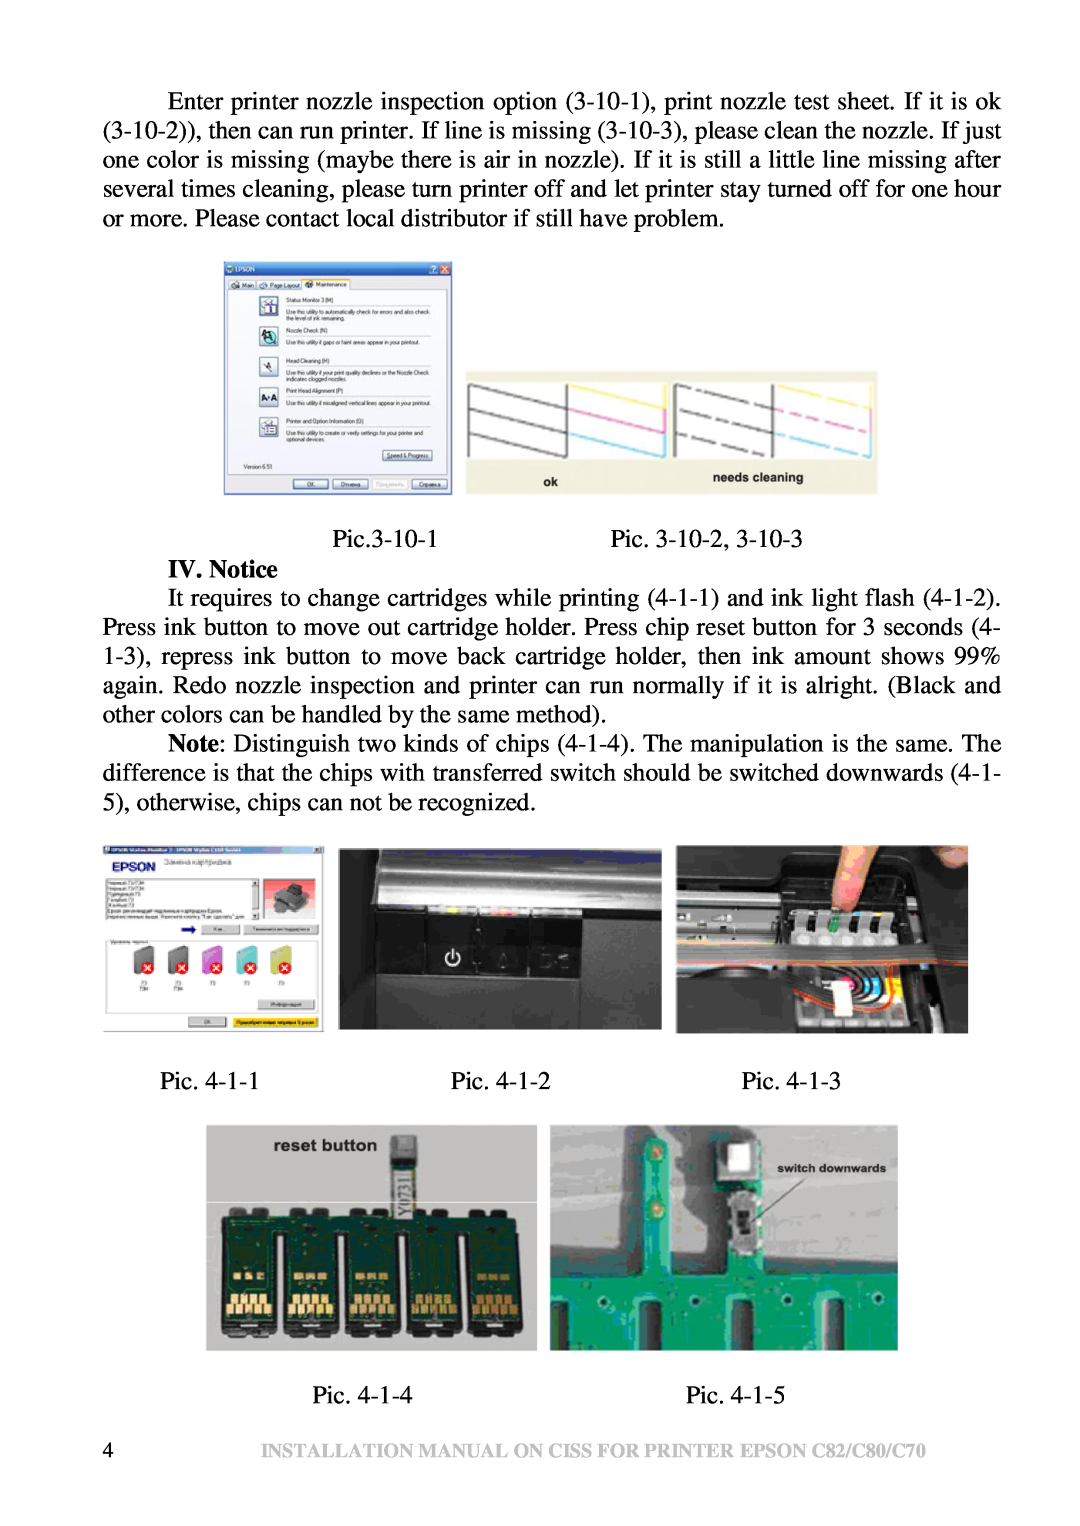 Epson C82, C70 installation manual IV. Notice 